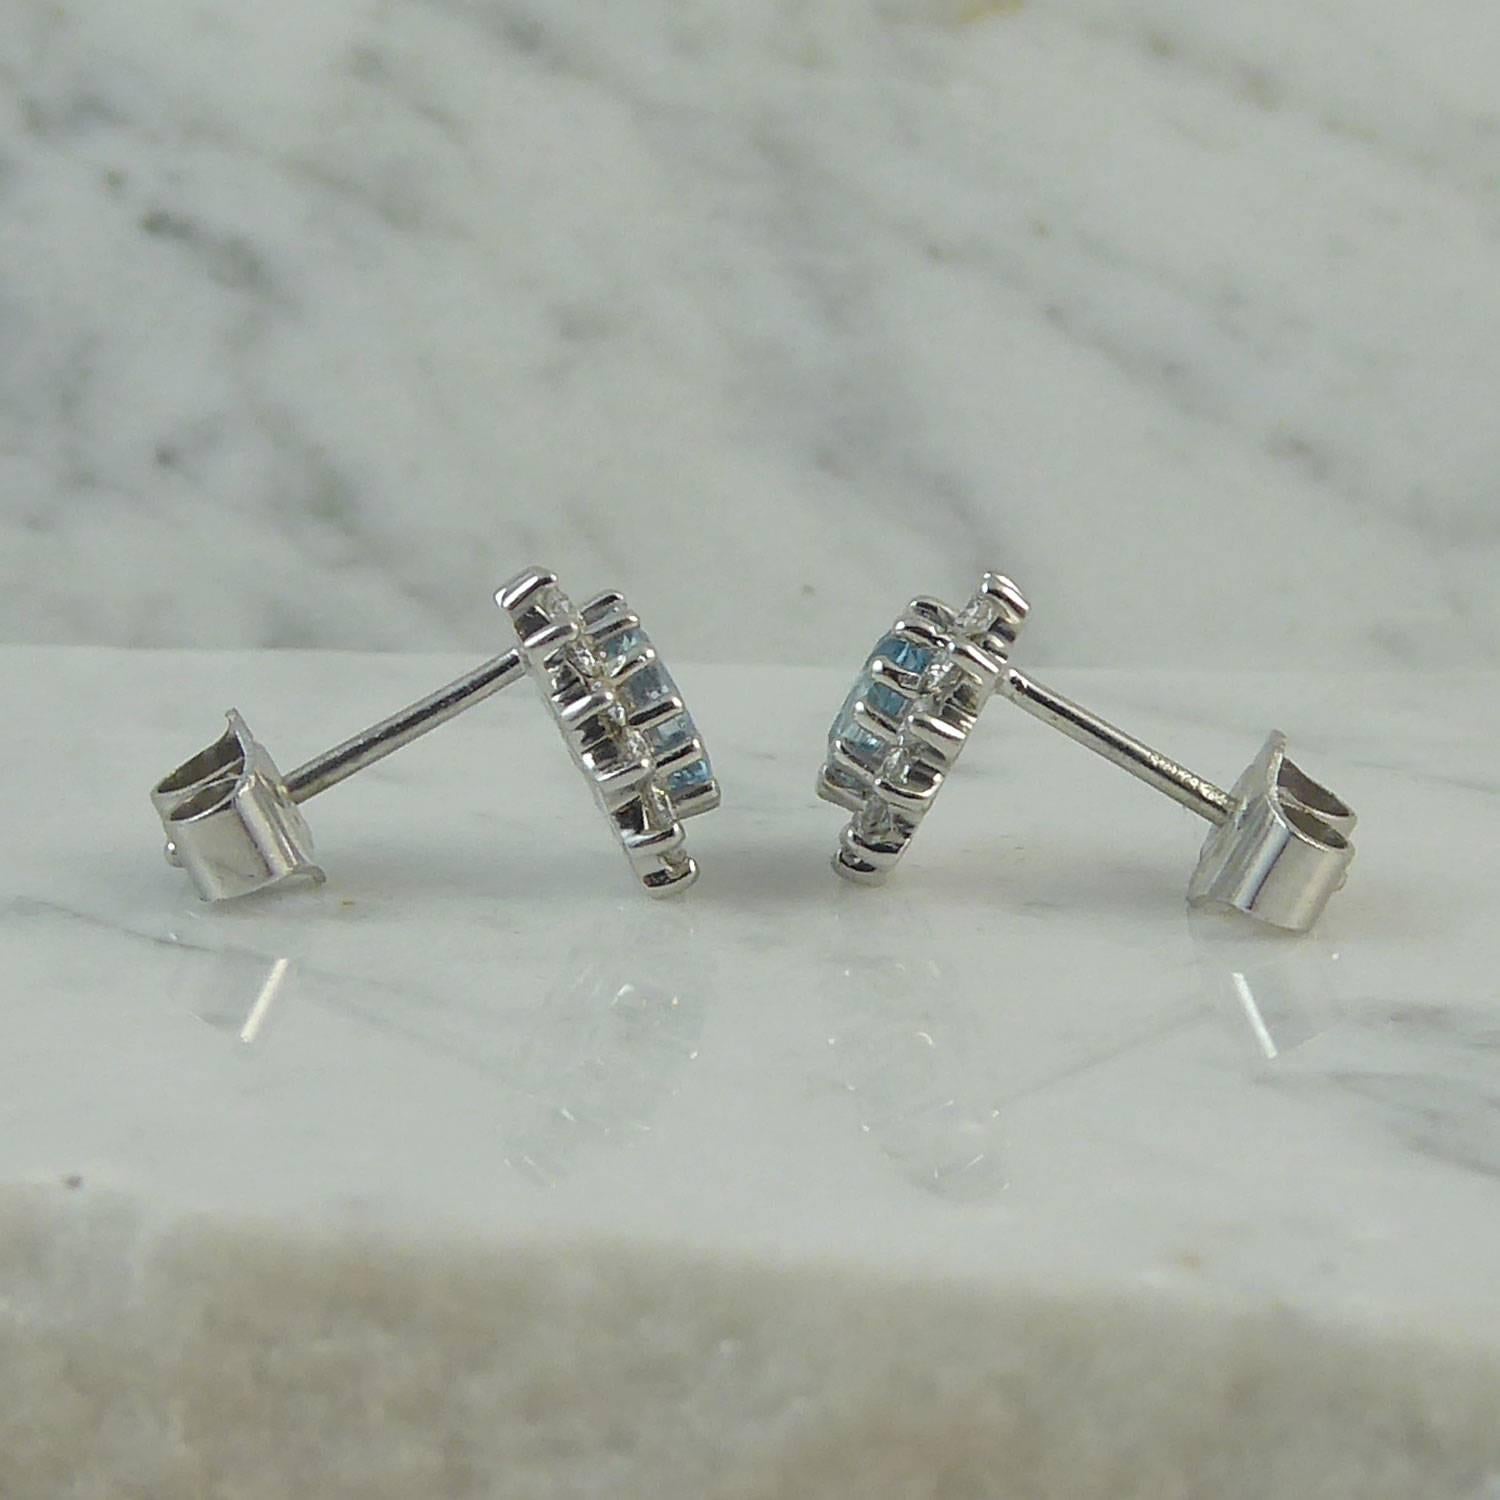 Oval Cut 1.0 Carat Aquamarine Diamond Stud Earrings, White Gold, Hallmarked London, 2010